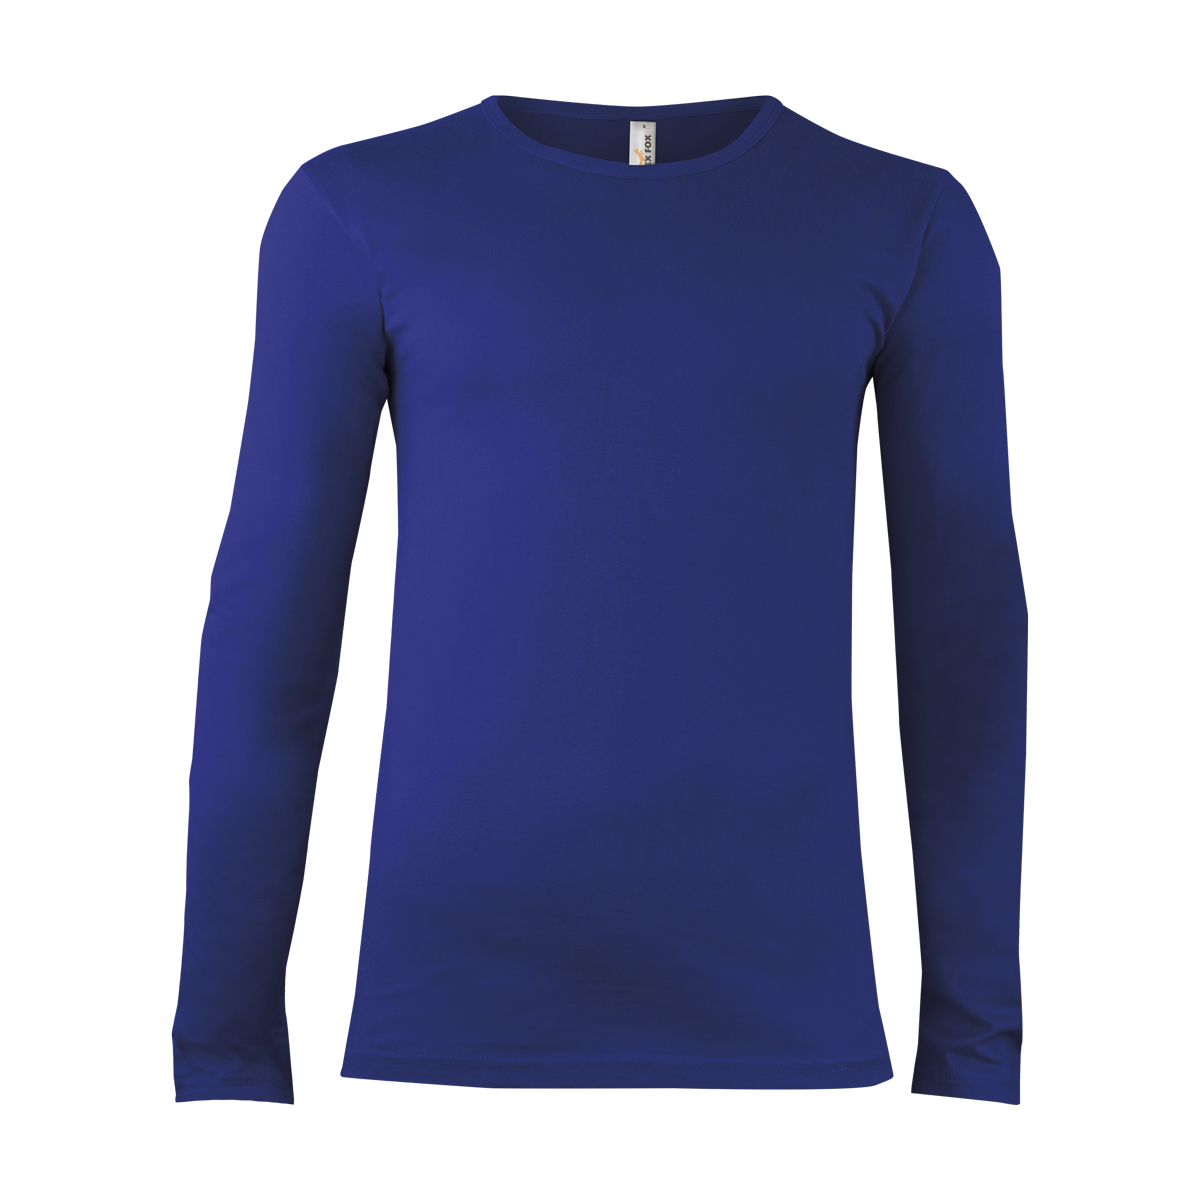 Tričko s dlouhým rukávem Alex Fox Long 150 - modré, S